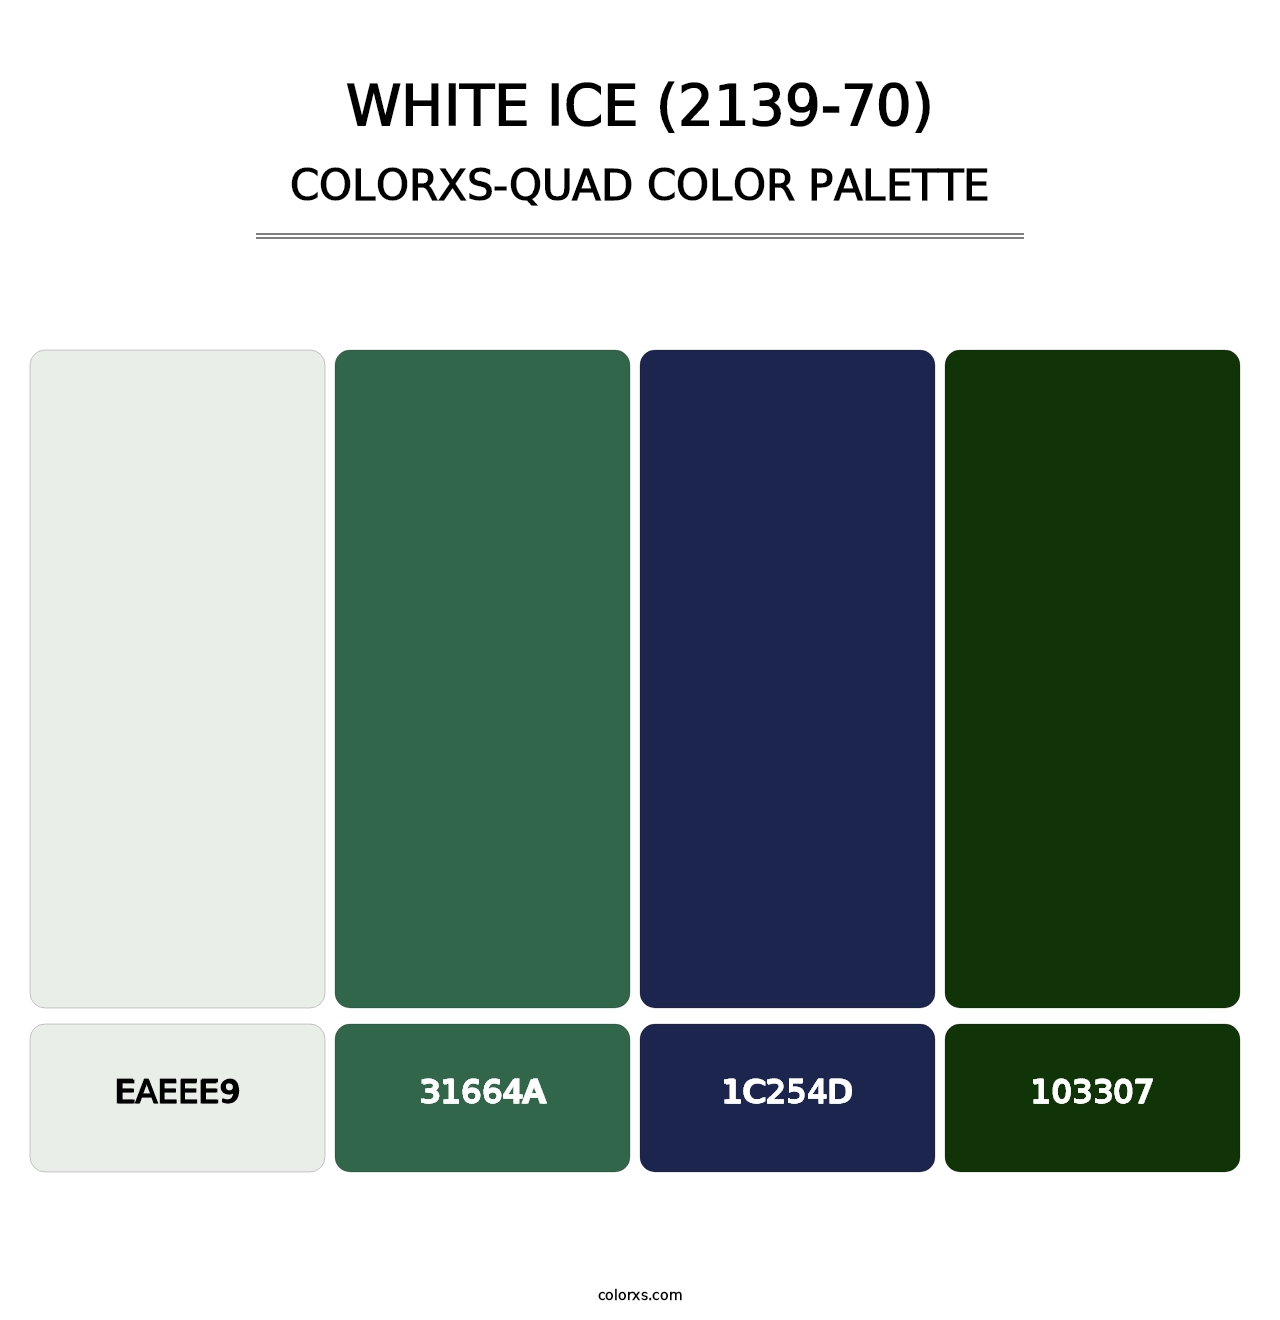 White Ice (2139-70) - Colorxs Quad Palette